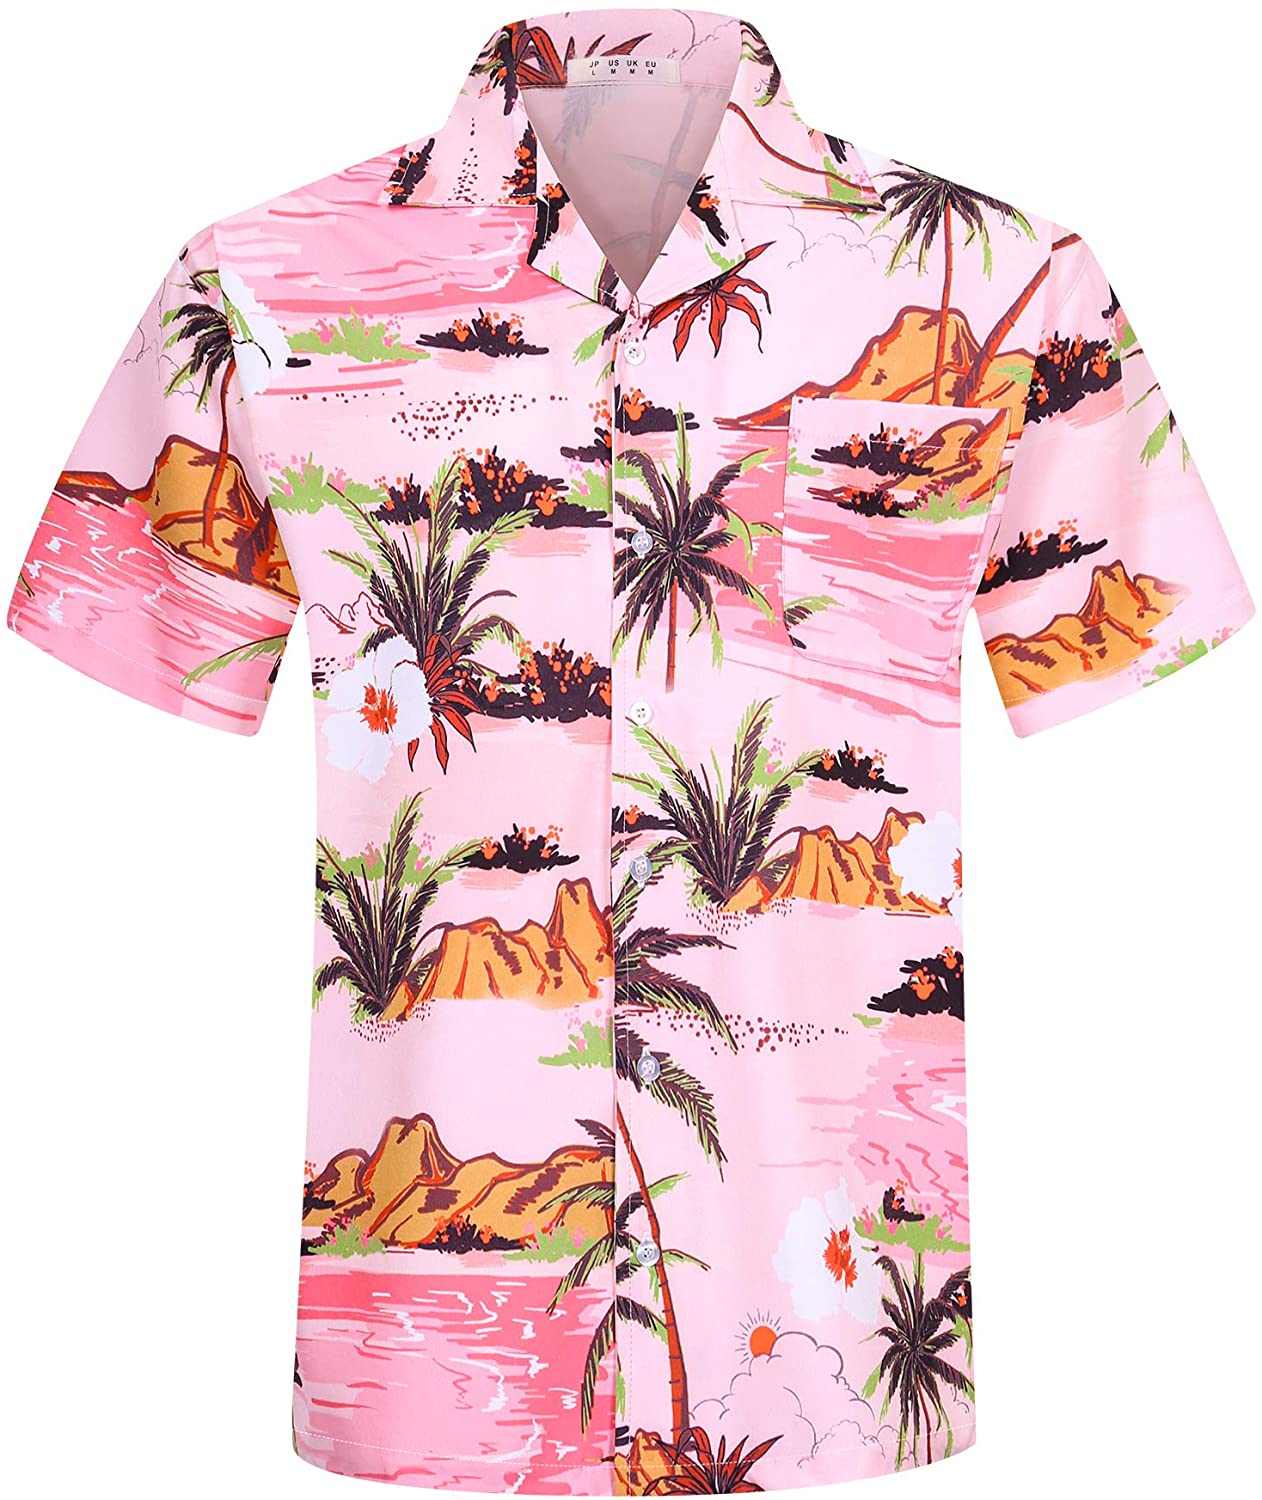 Mens Hawaiian Aloha Shirts with Packets Floral Tropical Beach Casual Button Down 